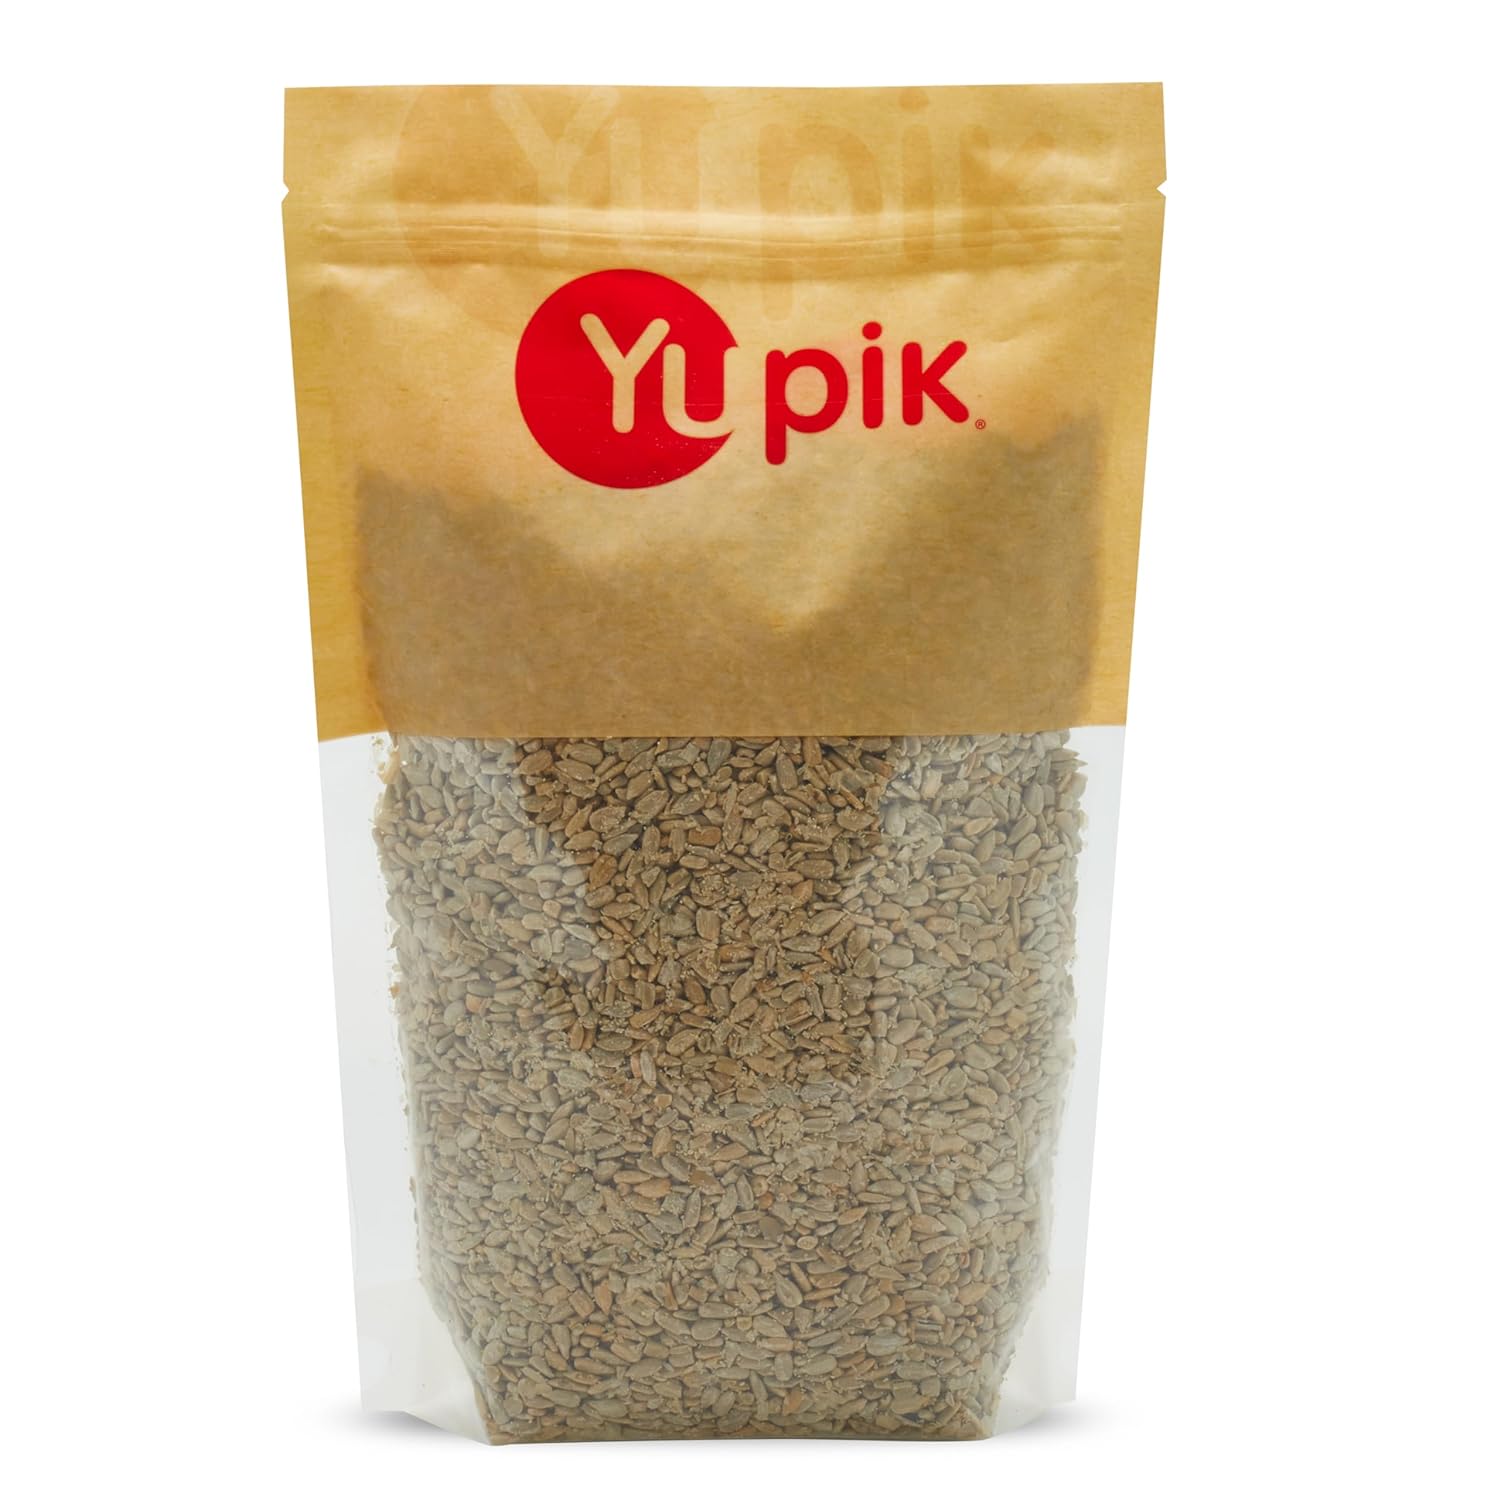 Yupik Roasted Sunflower Seeds (No Shell), 2.2 lb, Unsalted Kernels, Hulled Seeds, Healthy Snack, Source of Fiber, Versatile Ingredient